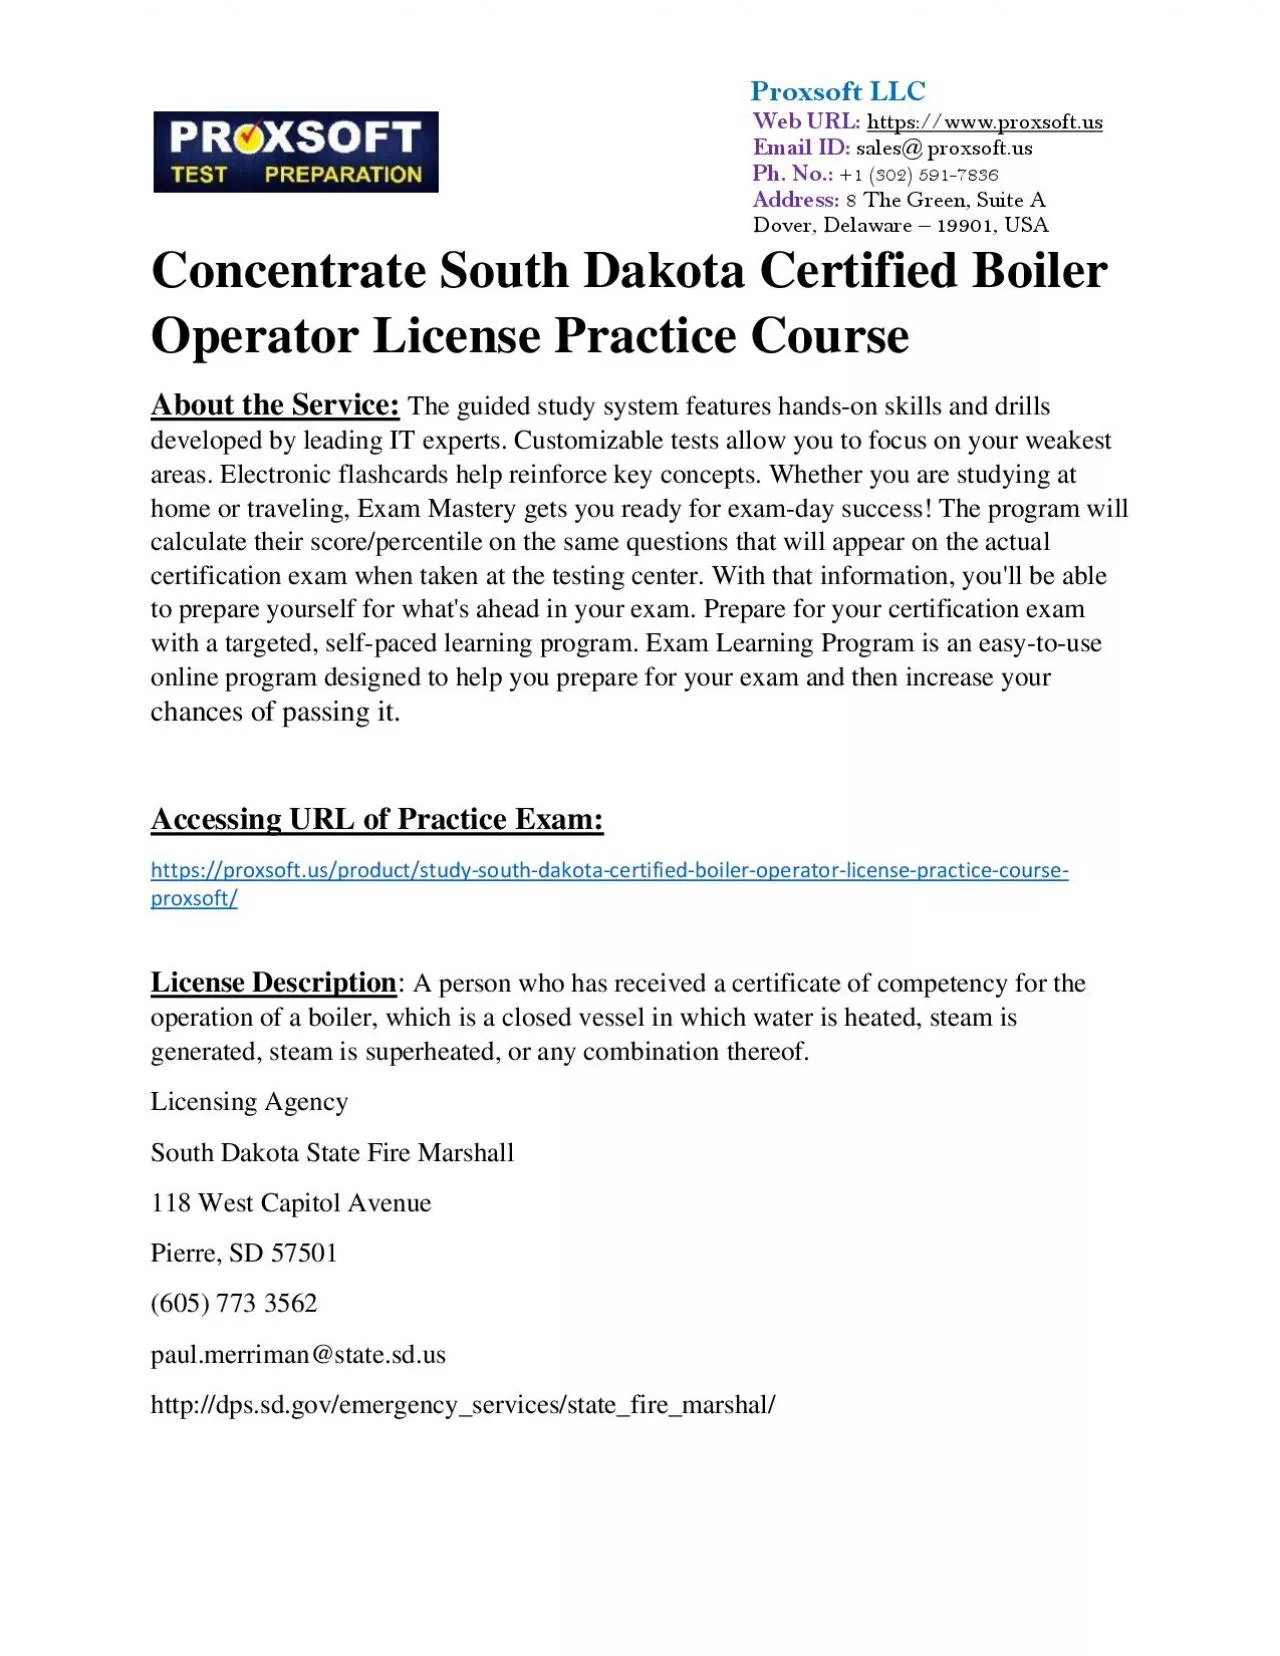 Concentrate South Dakota Certified Boiler Operator License Practice Course